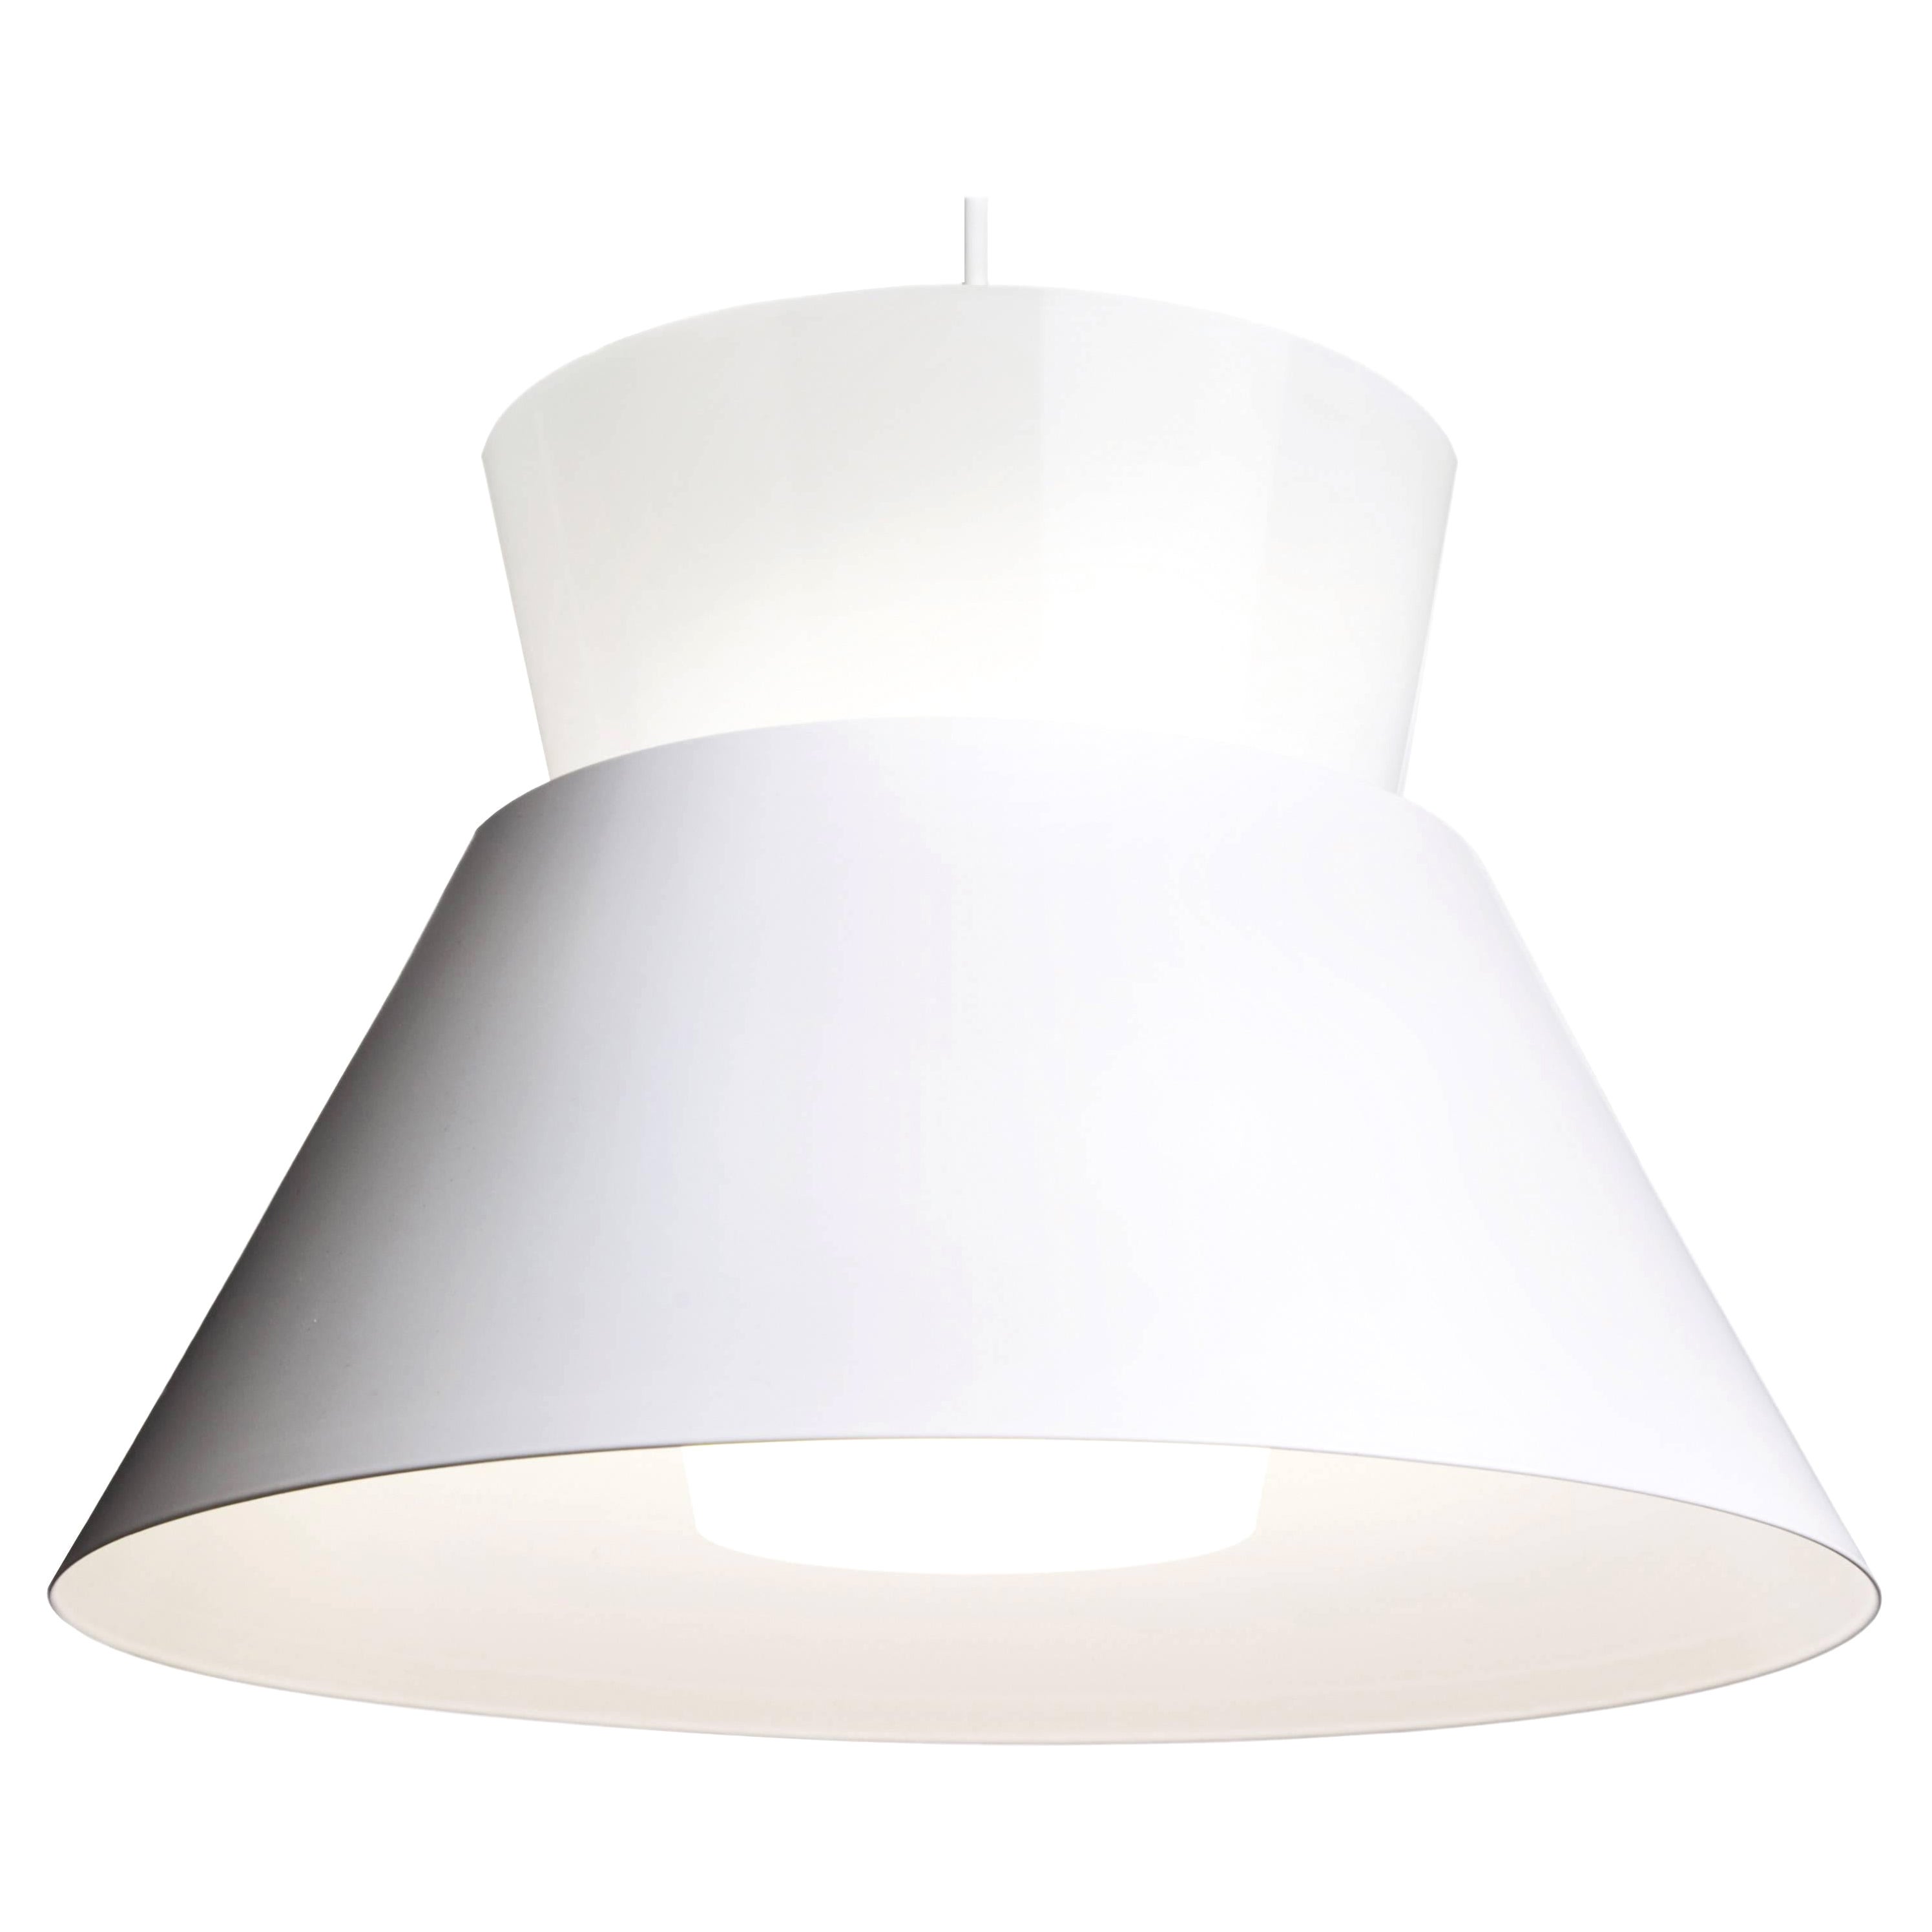 Lampe suspendue blanche Yki Nummi « 1955 » pour Innolux Oy, Finlande en vente